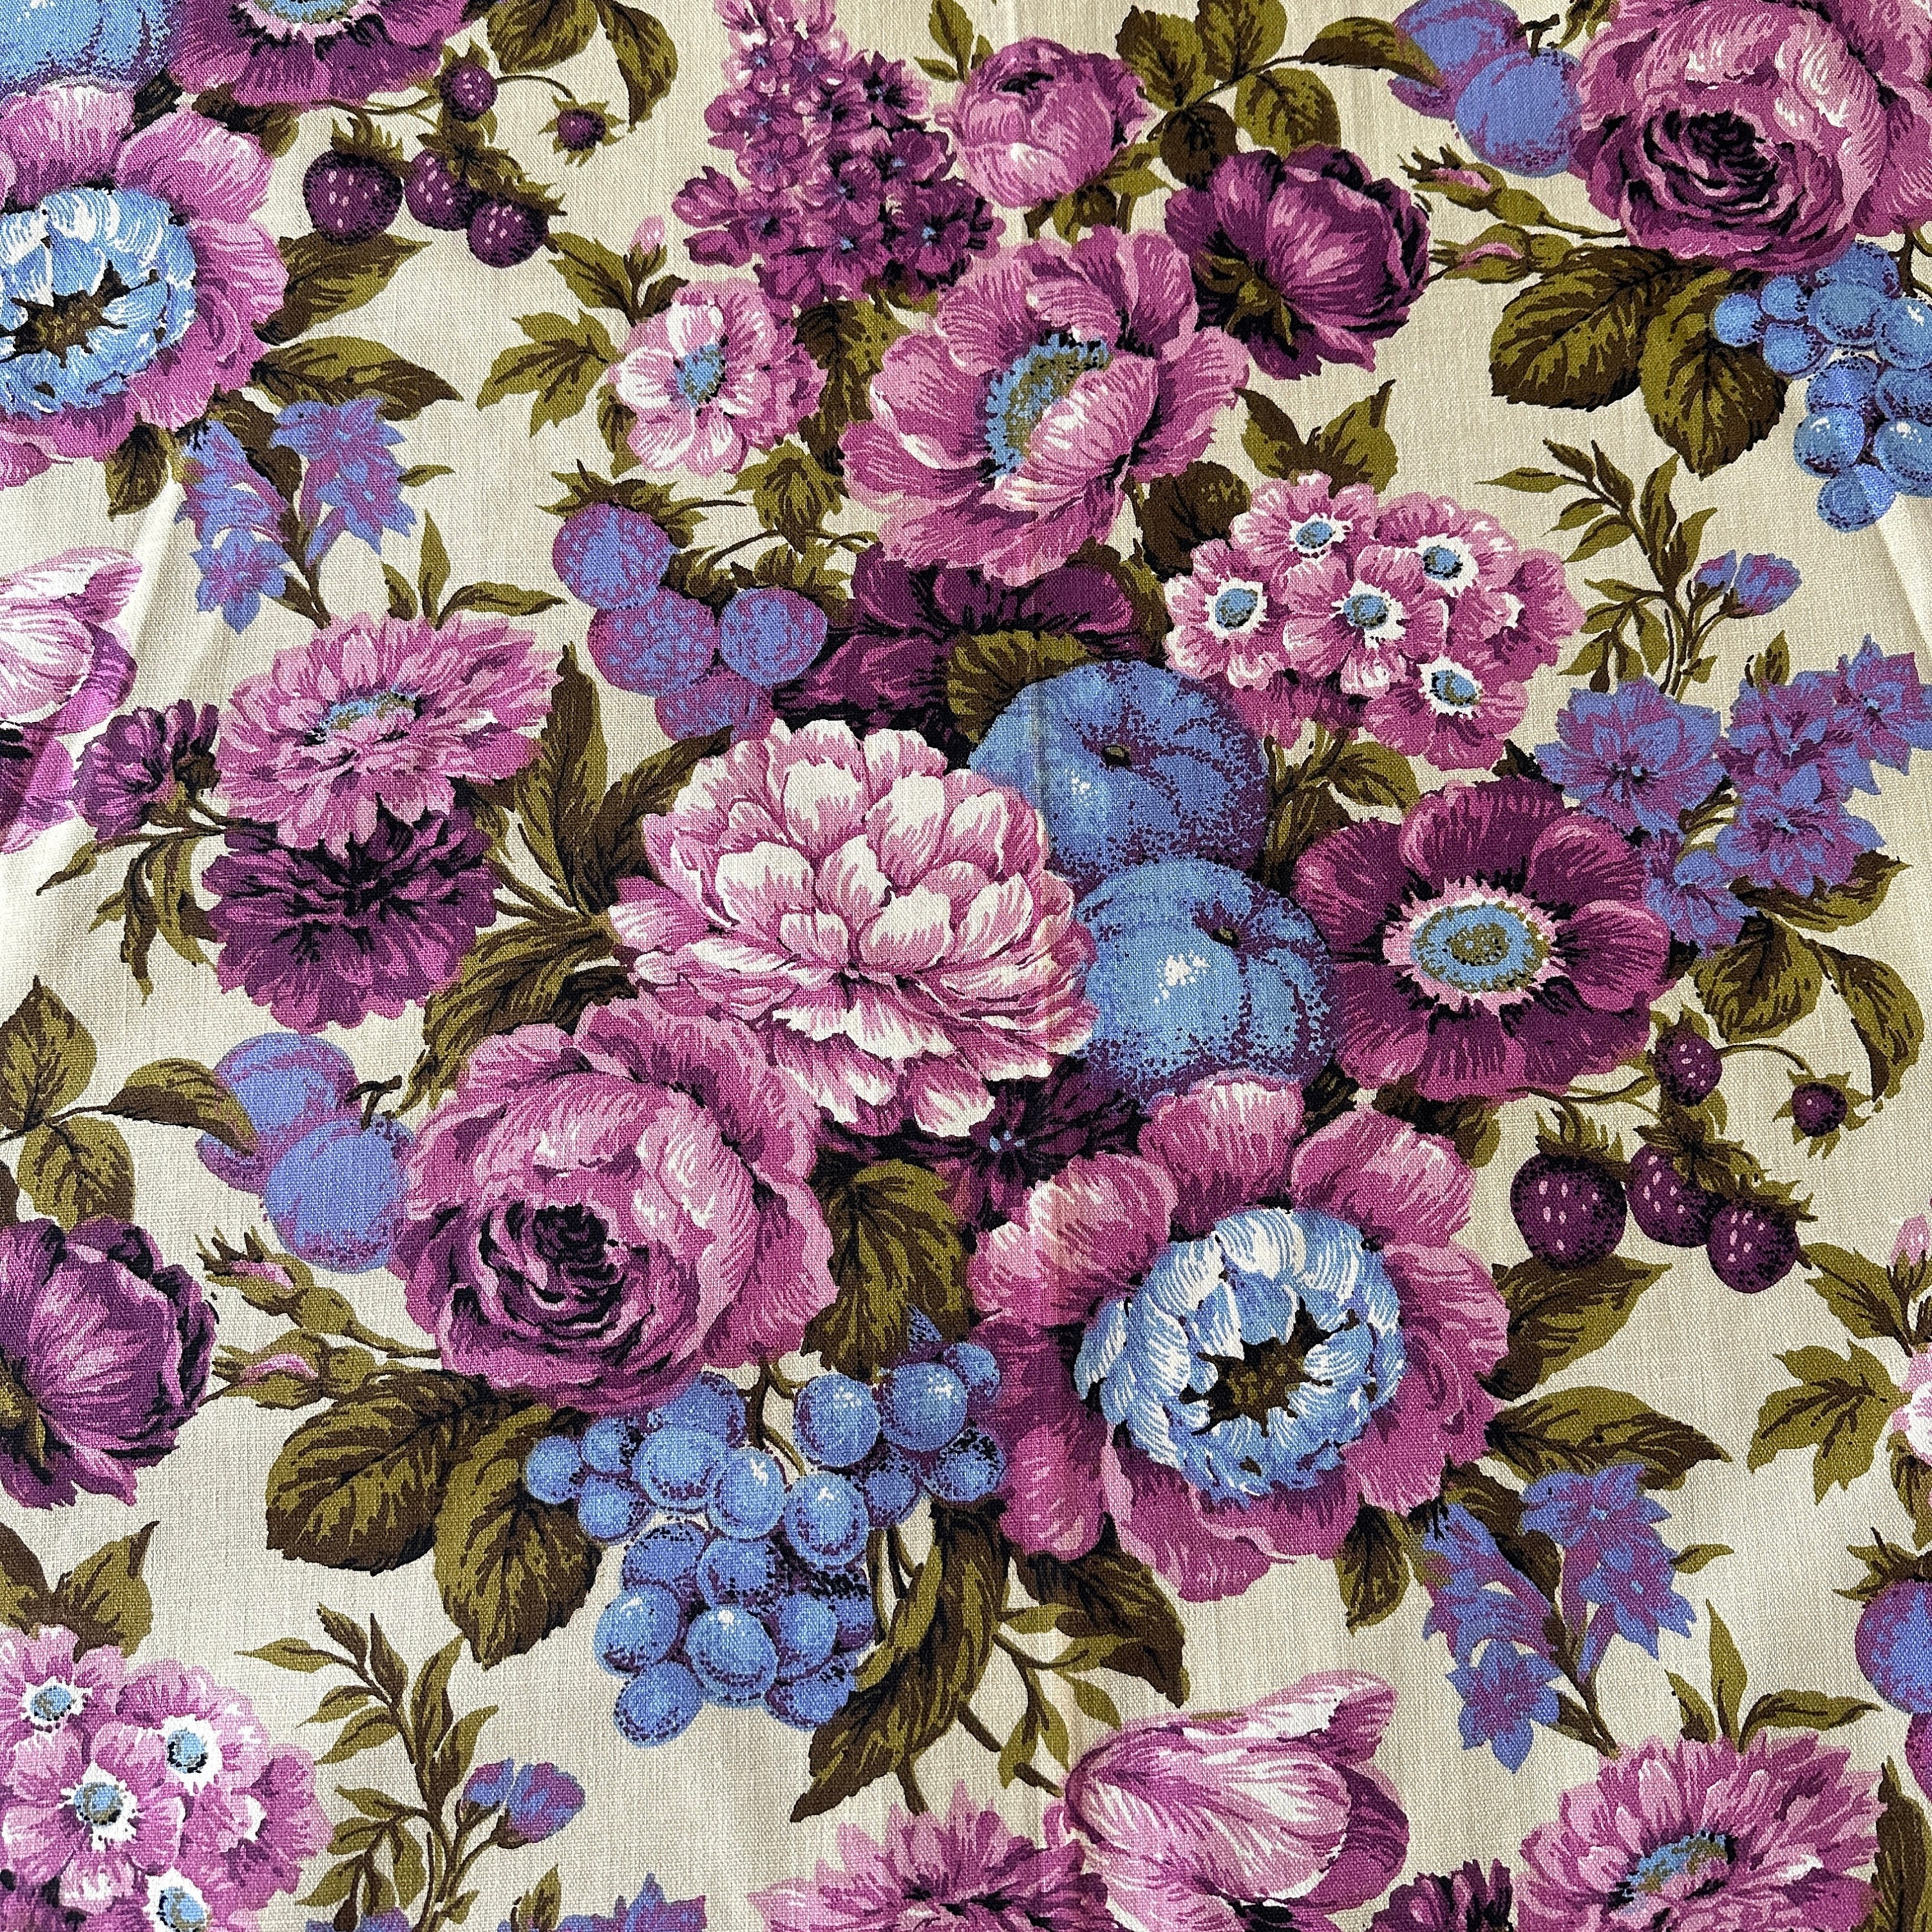 Leaf Batik Clearance Fabric by the Yard Choose Blue or Purple Batik Fabric  IS14T-HH1 